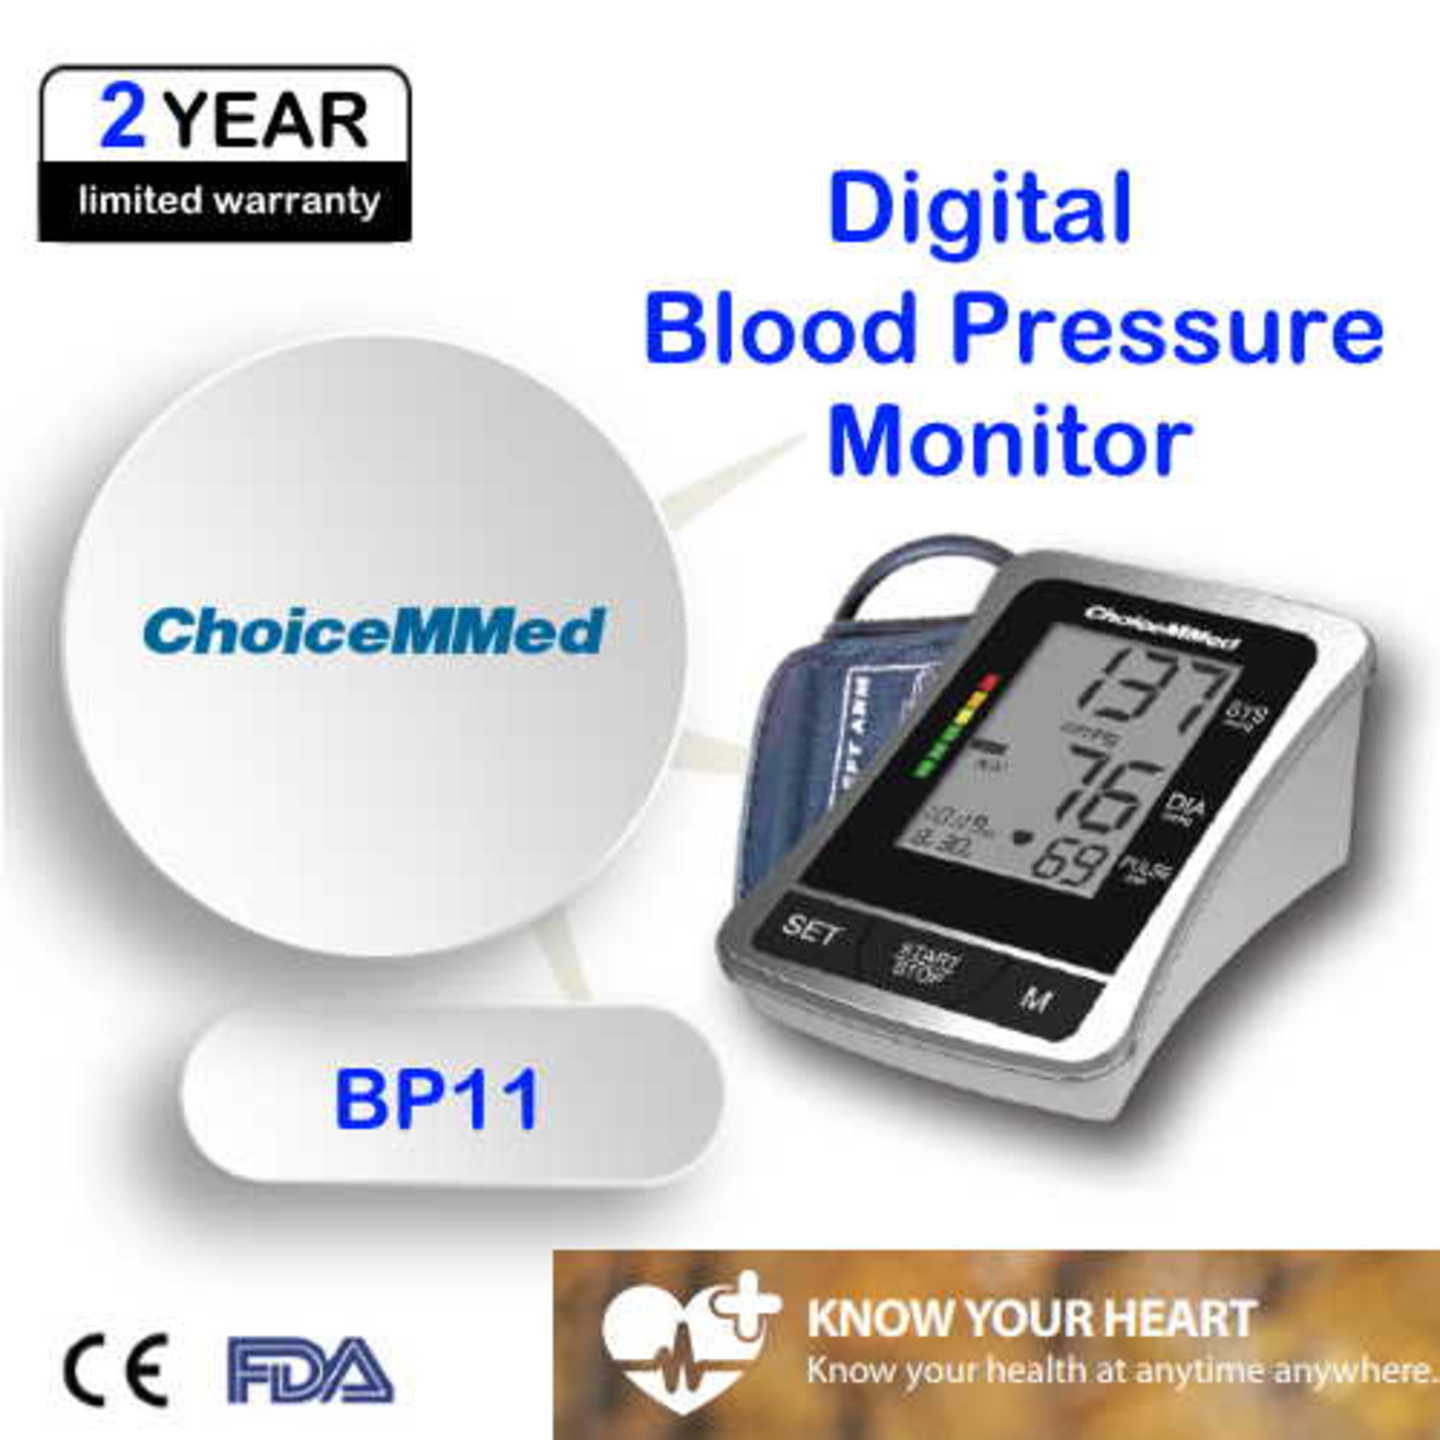 ChoiceMMed Blood Presssure Monitor - BP11